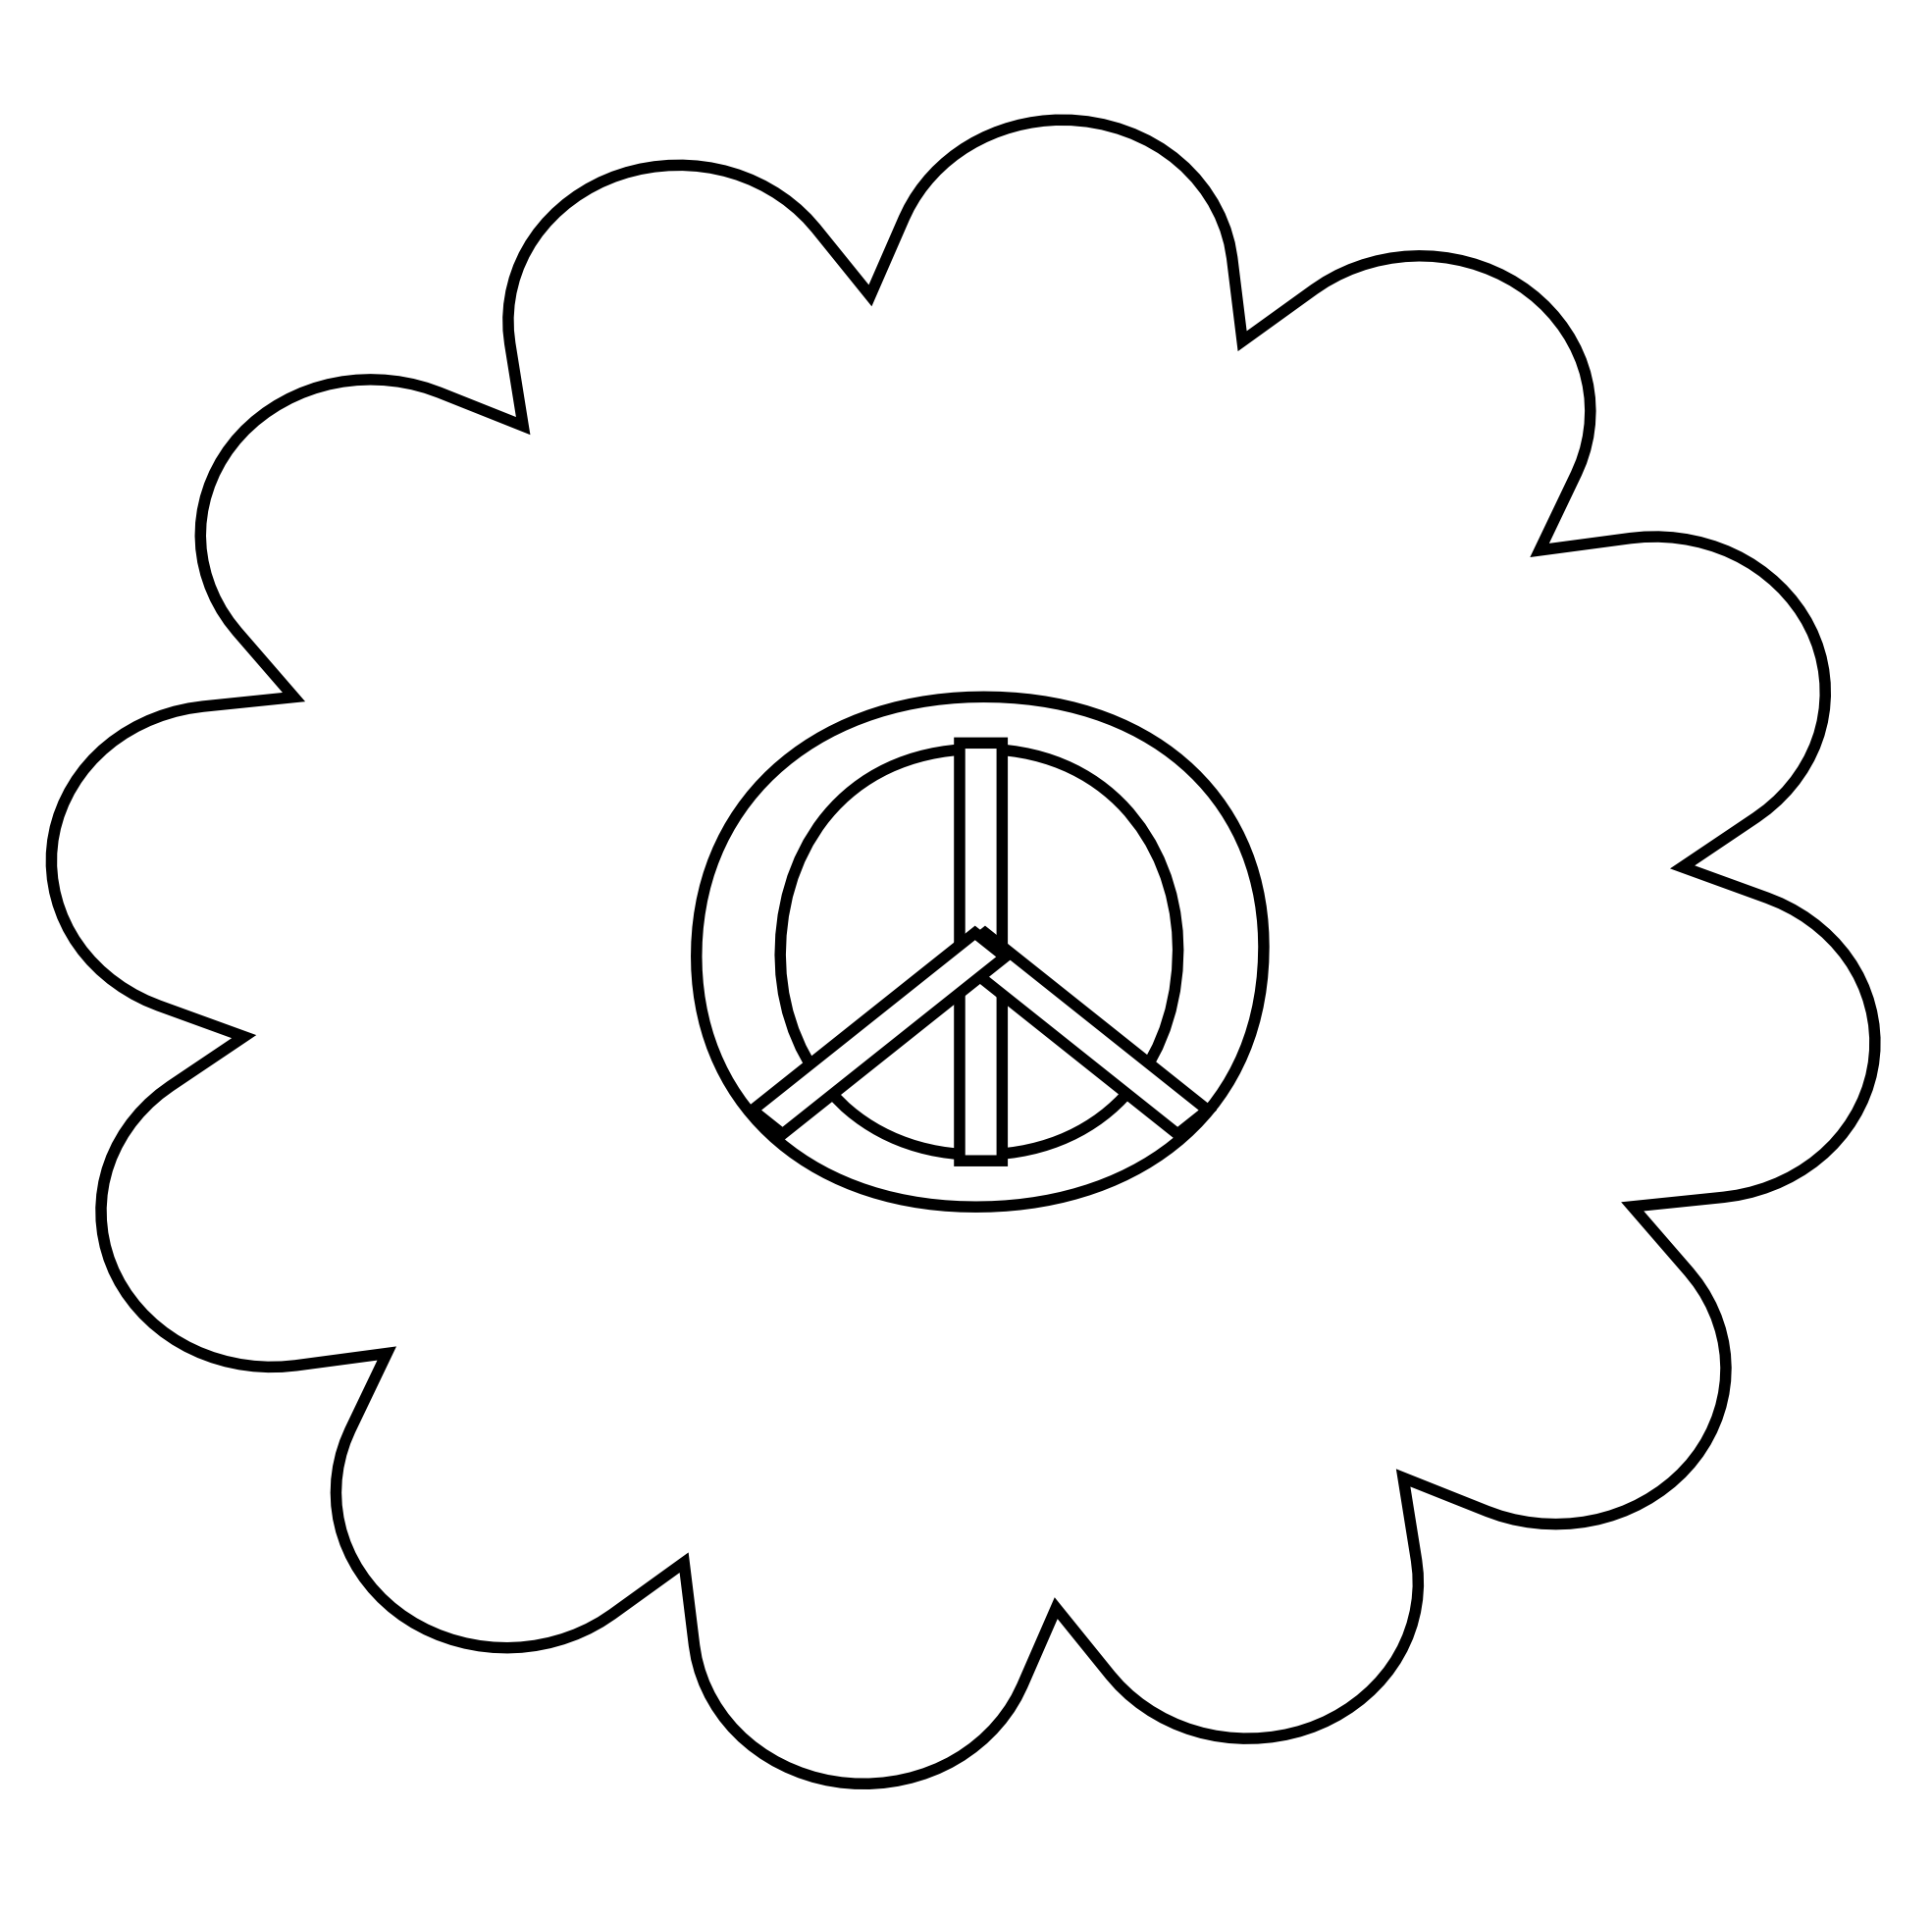 Peace Symbol Peace Sign Flower 1 4 Black White Line Art Coloring ...